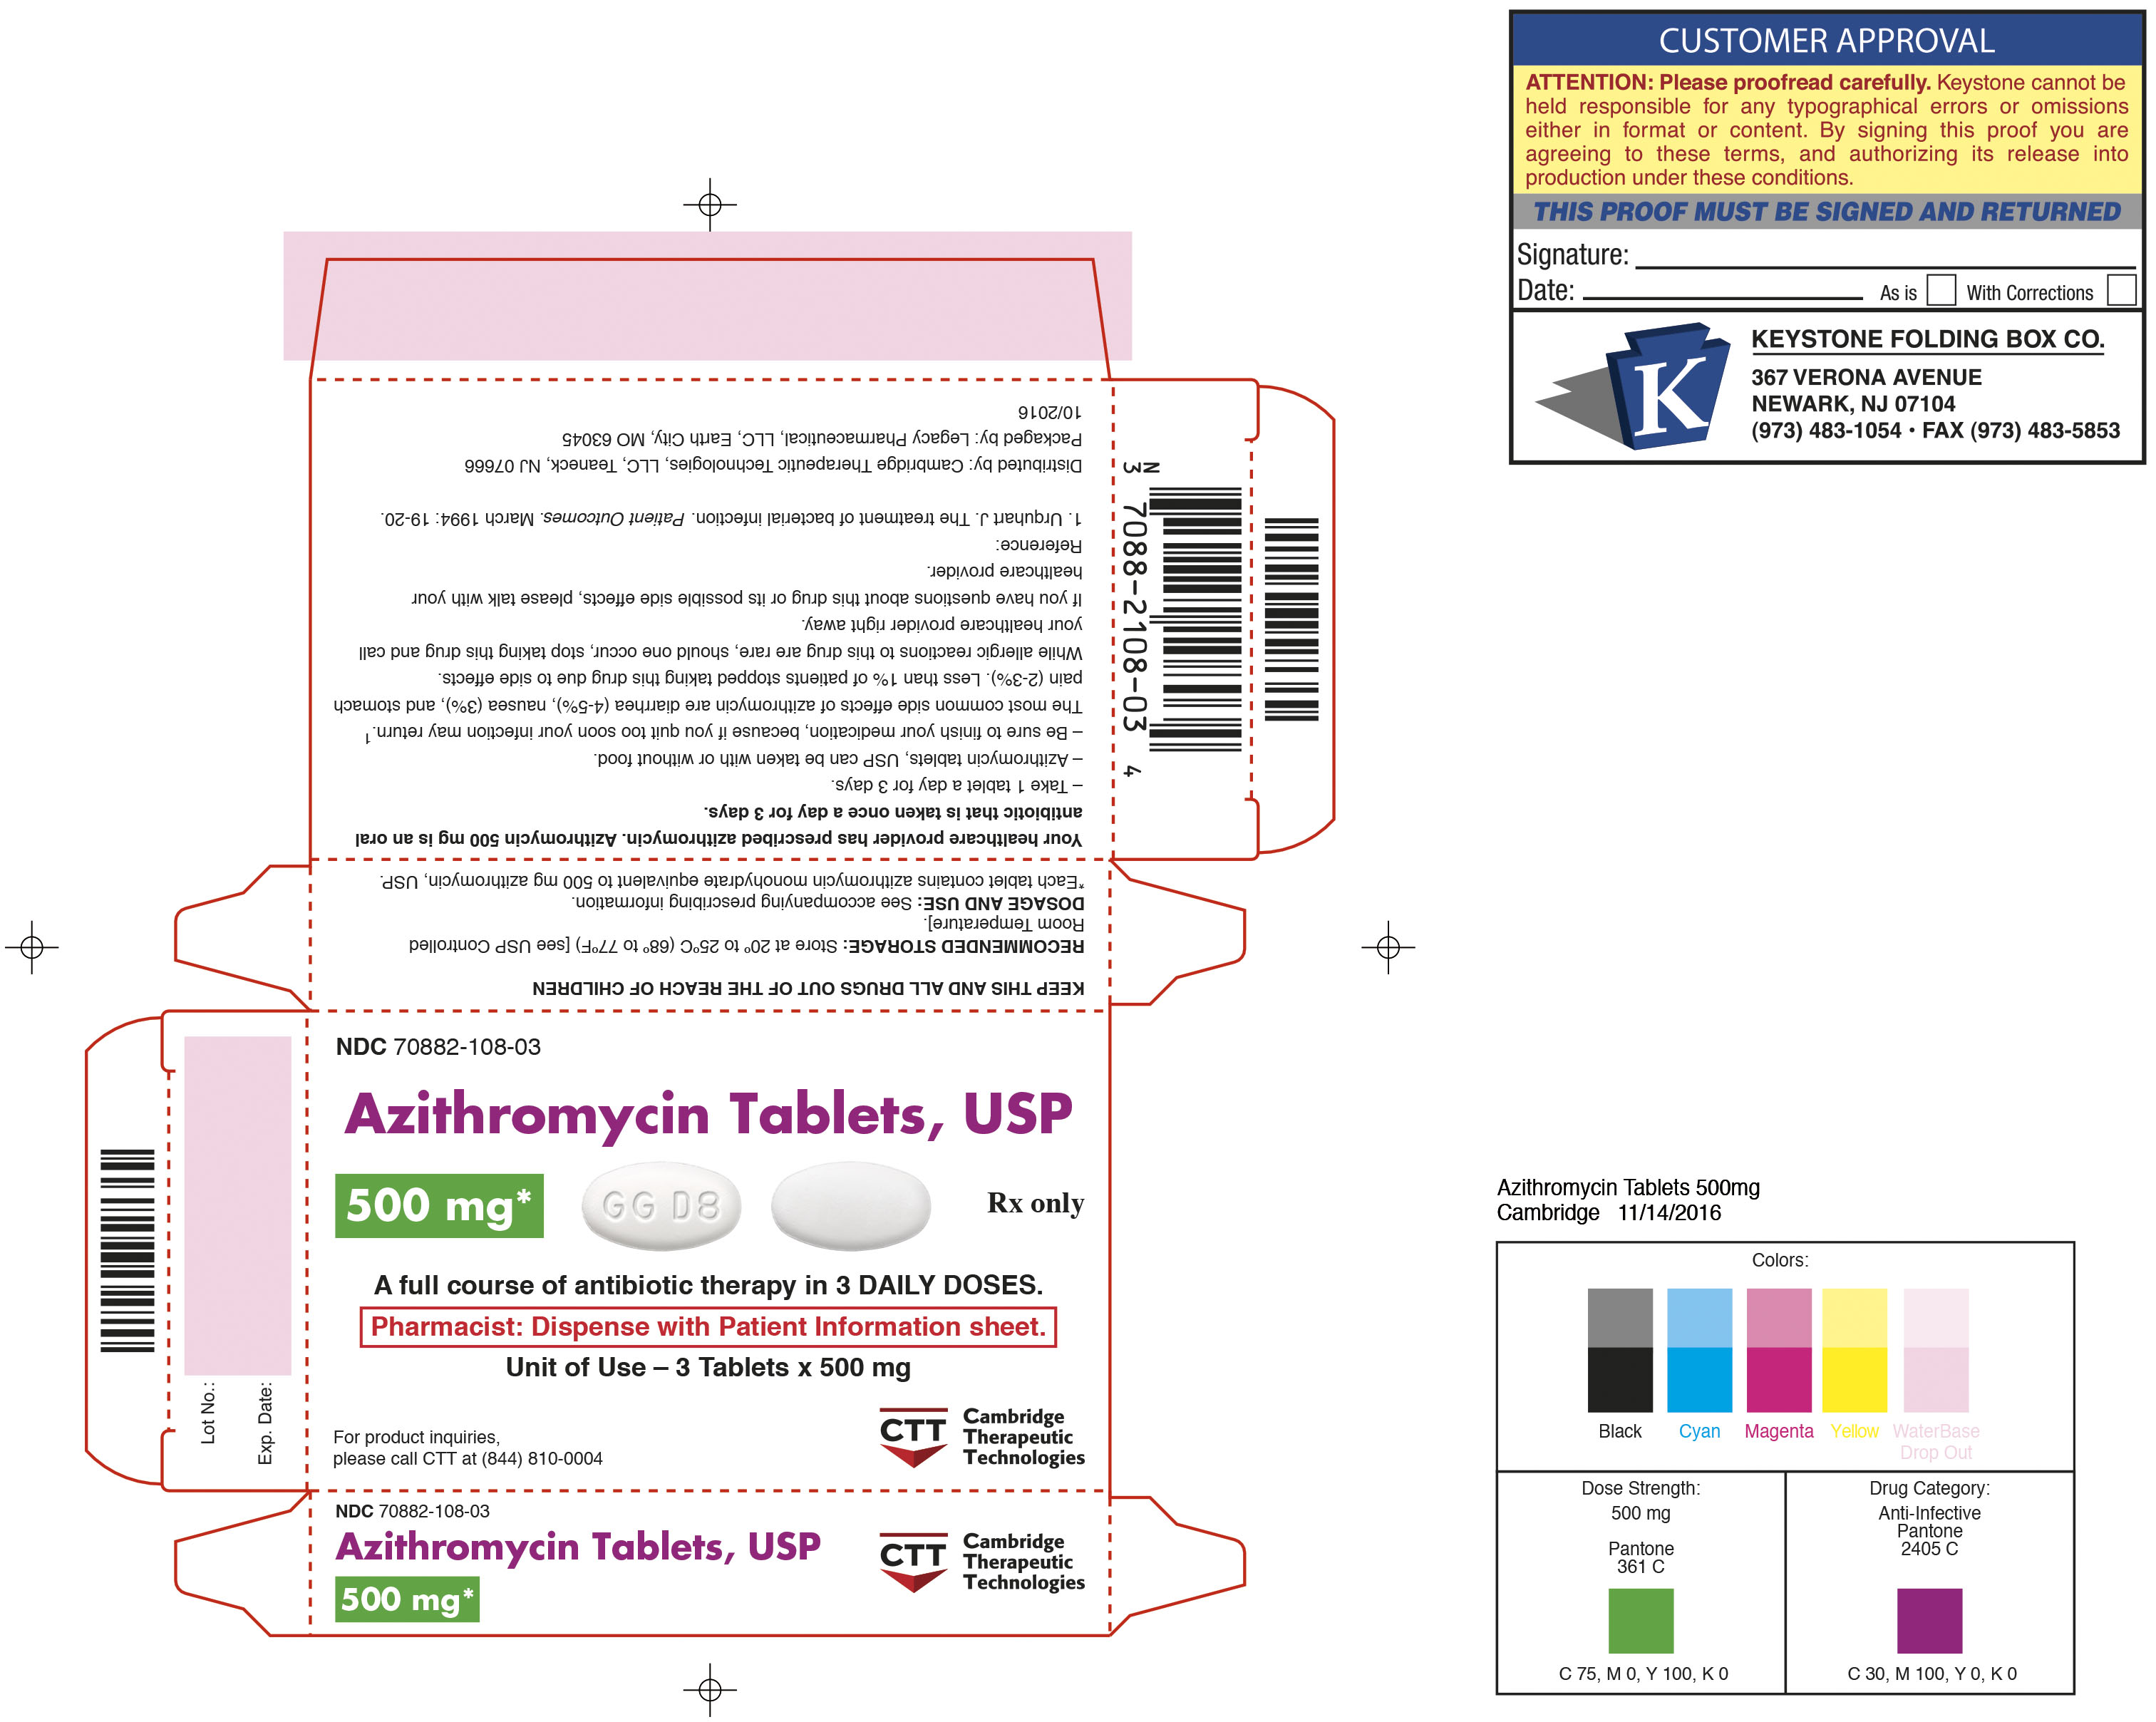 Azithromycin Tablets, USP 500 mg